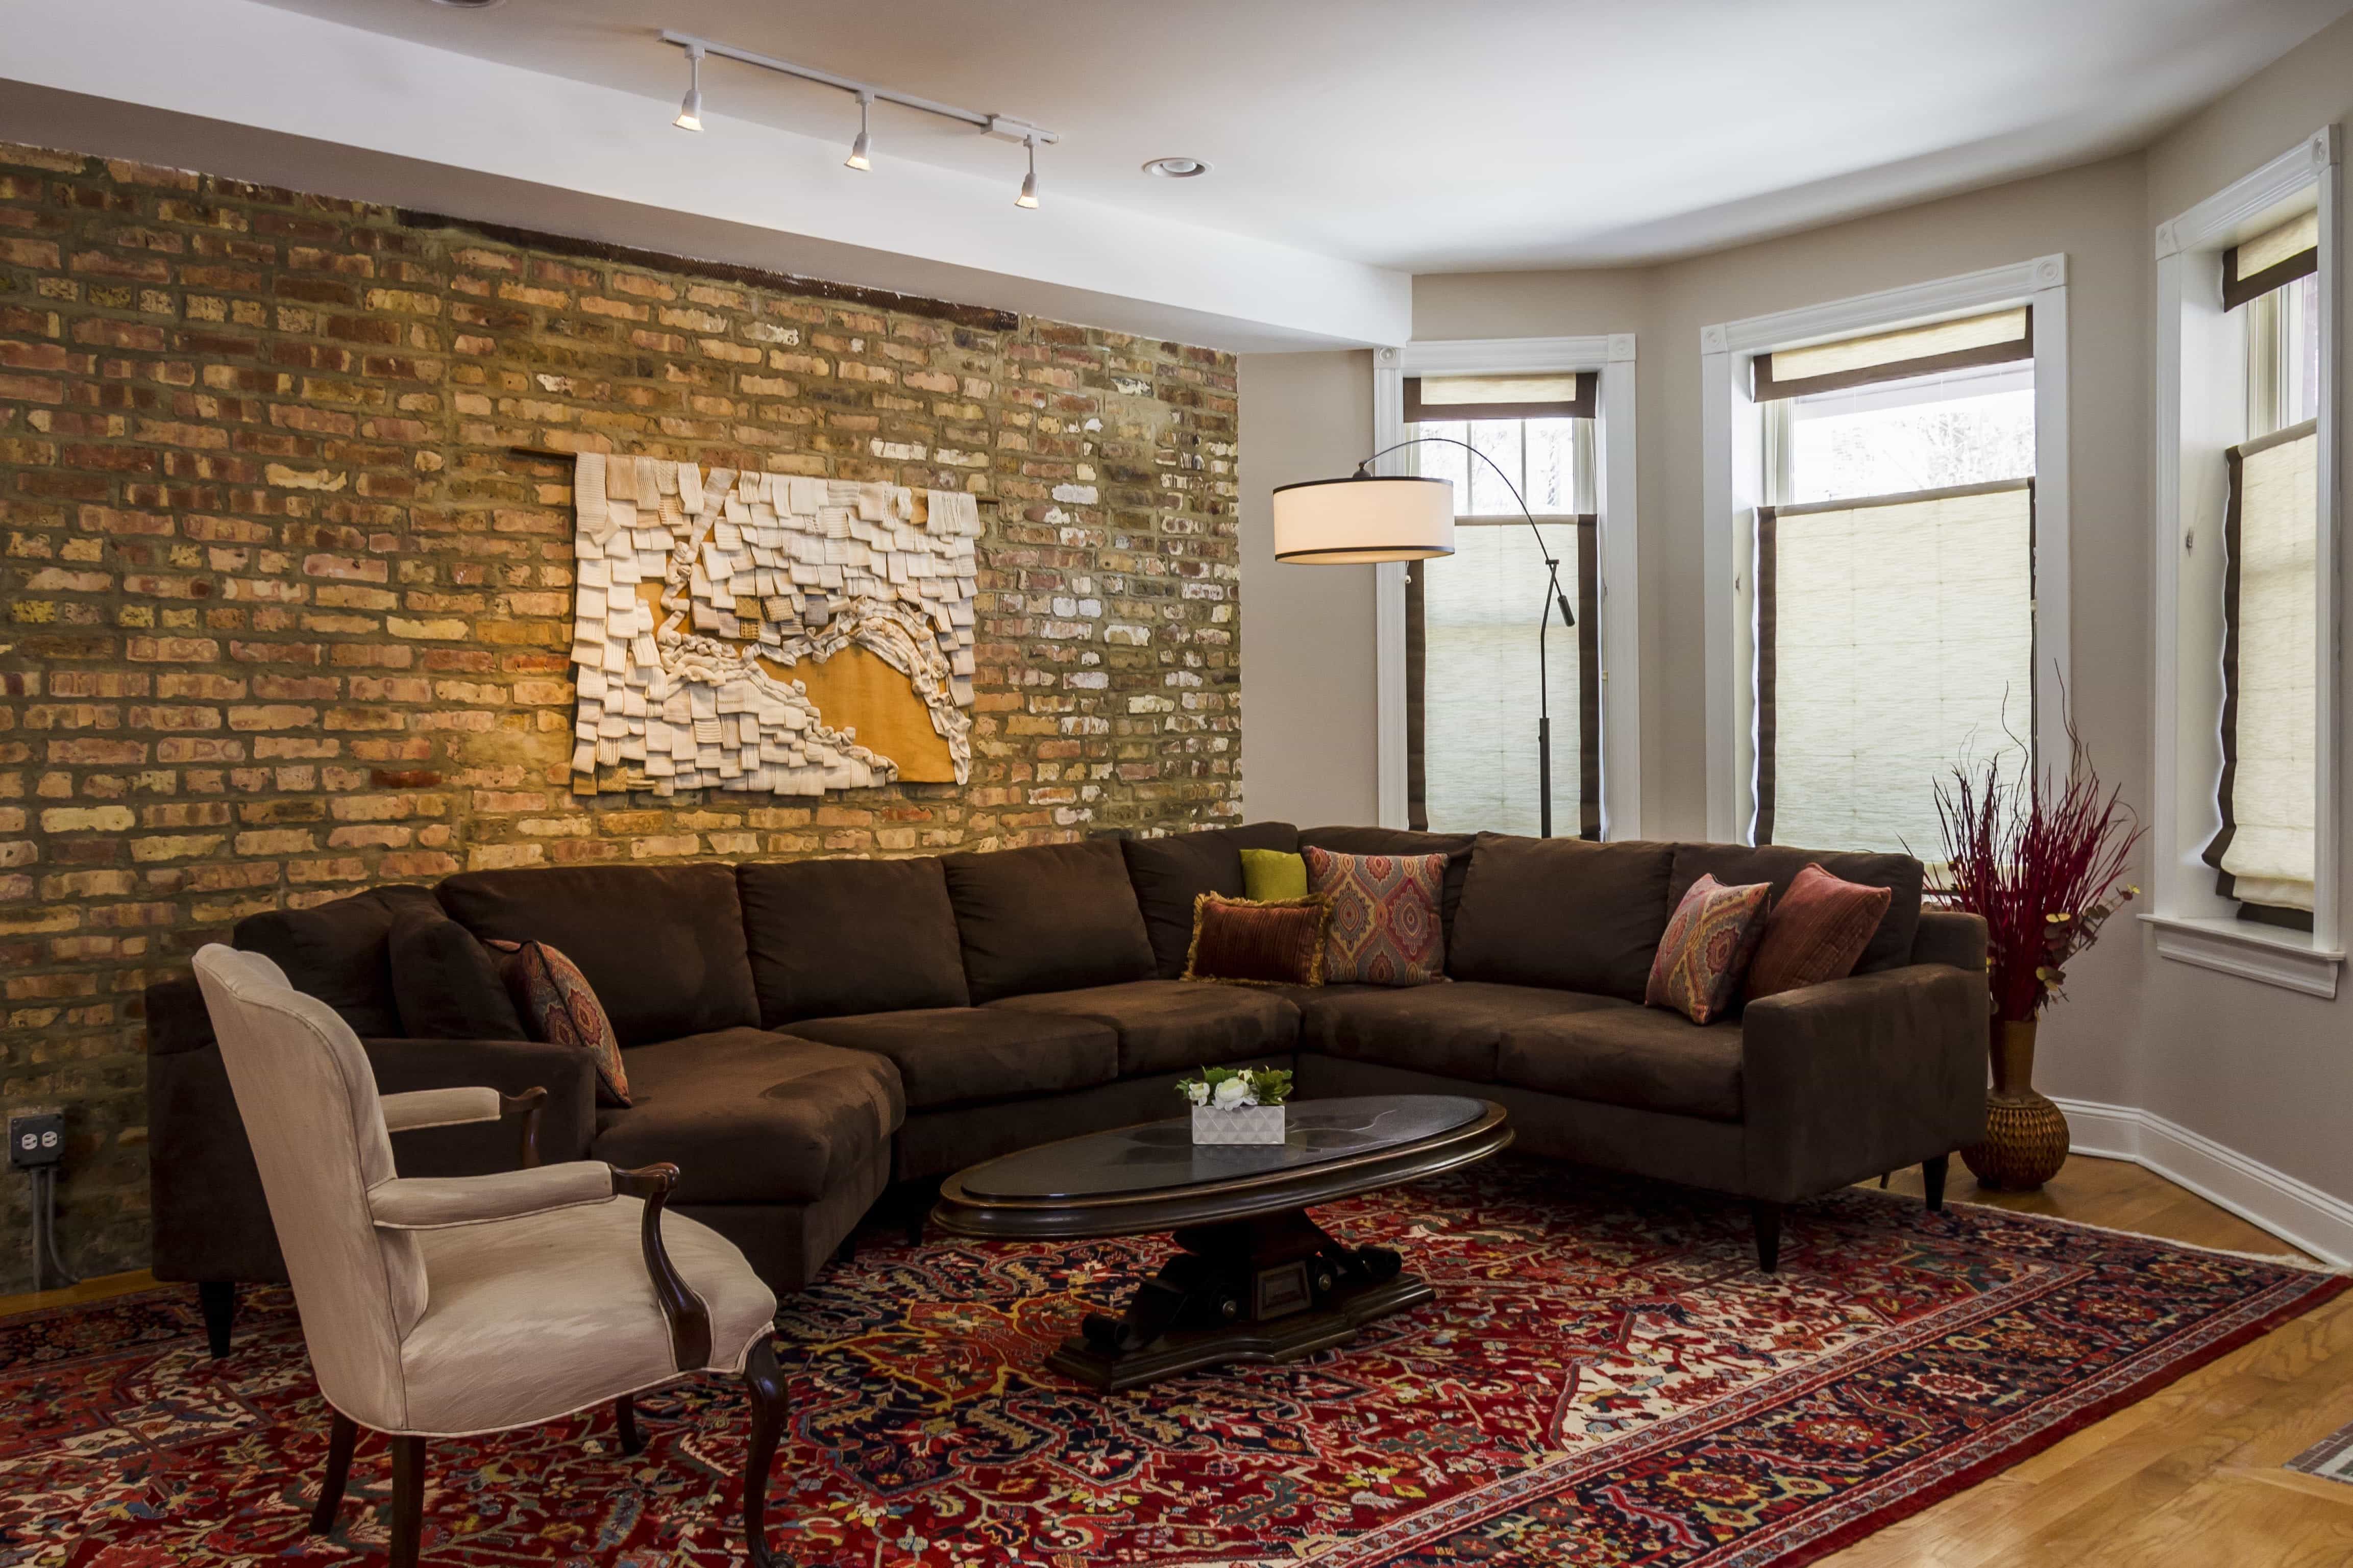 Decorative Brick Wall Design For Your Interior #23735 | Interior Ideas